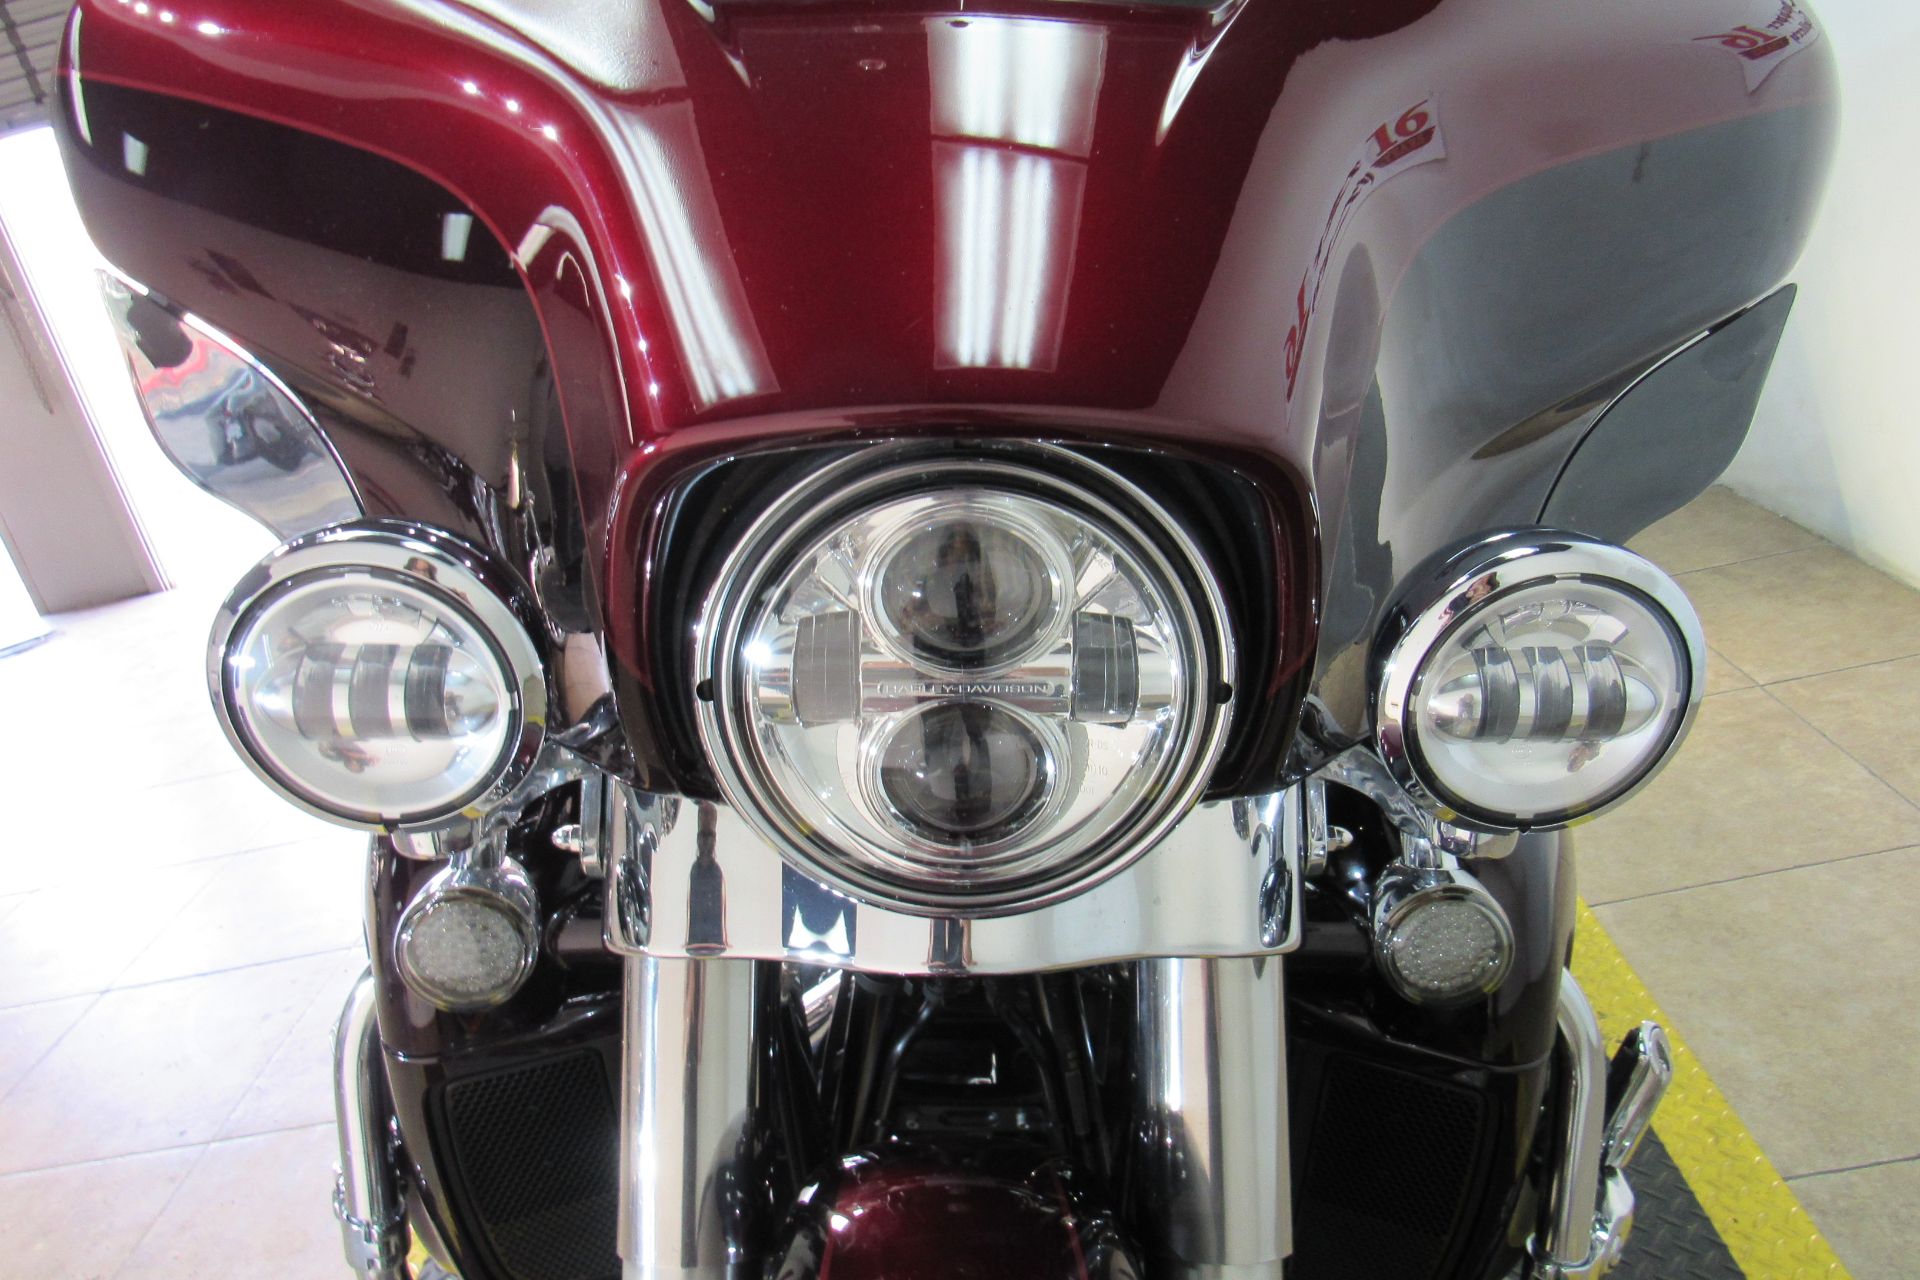 2014 Harley-Davidson Ultra Limited in Temecula, California - Photo 9